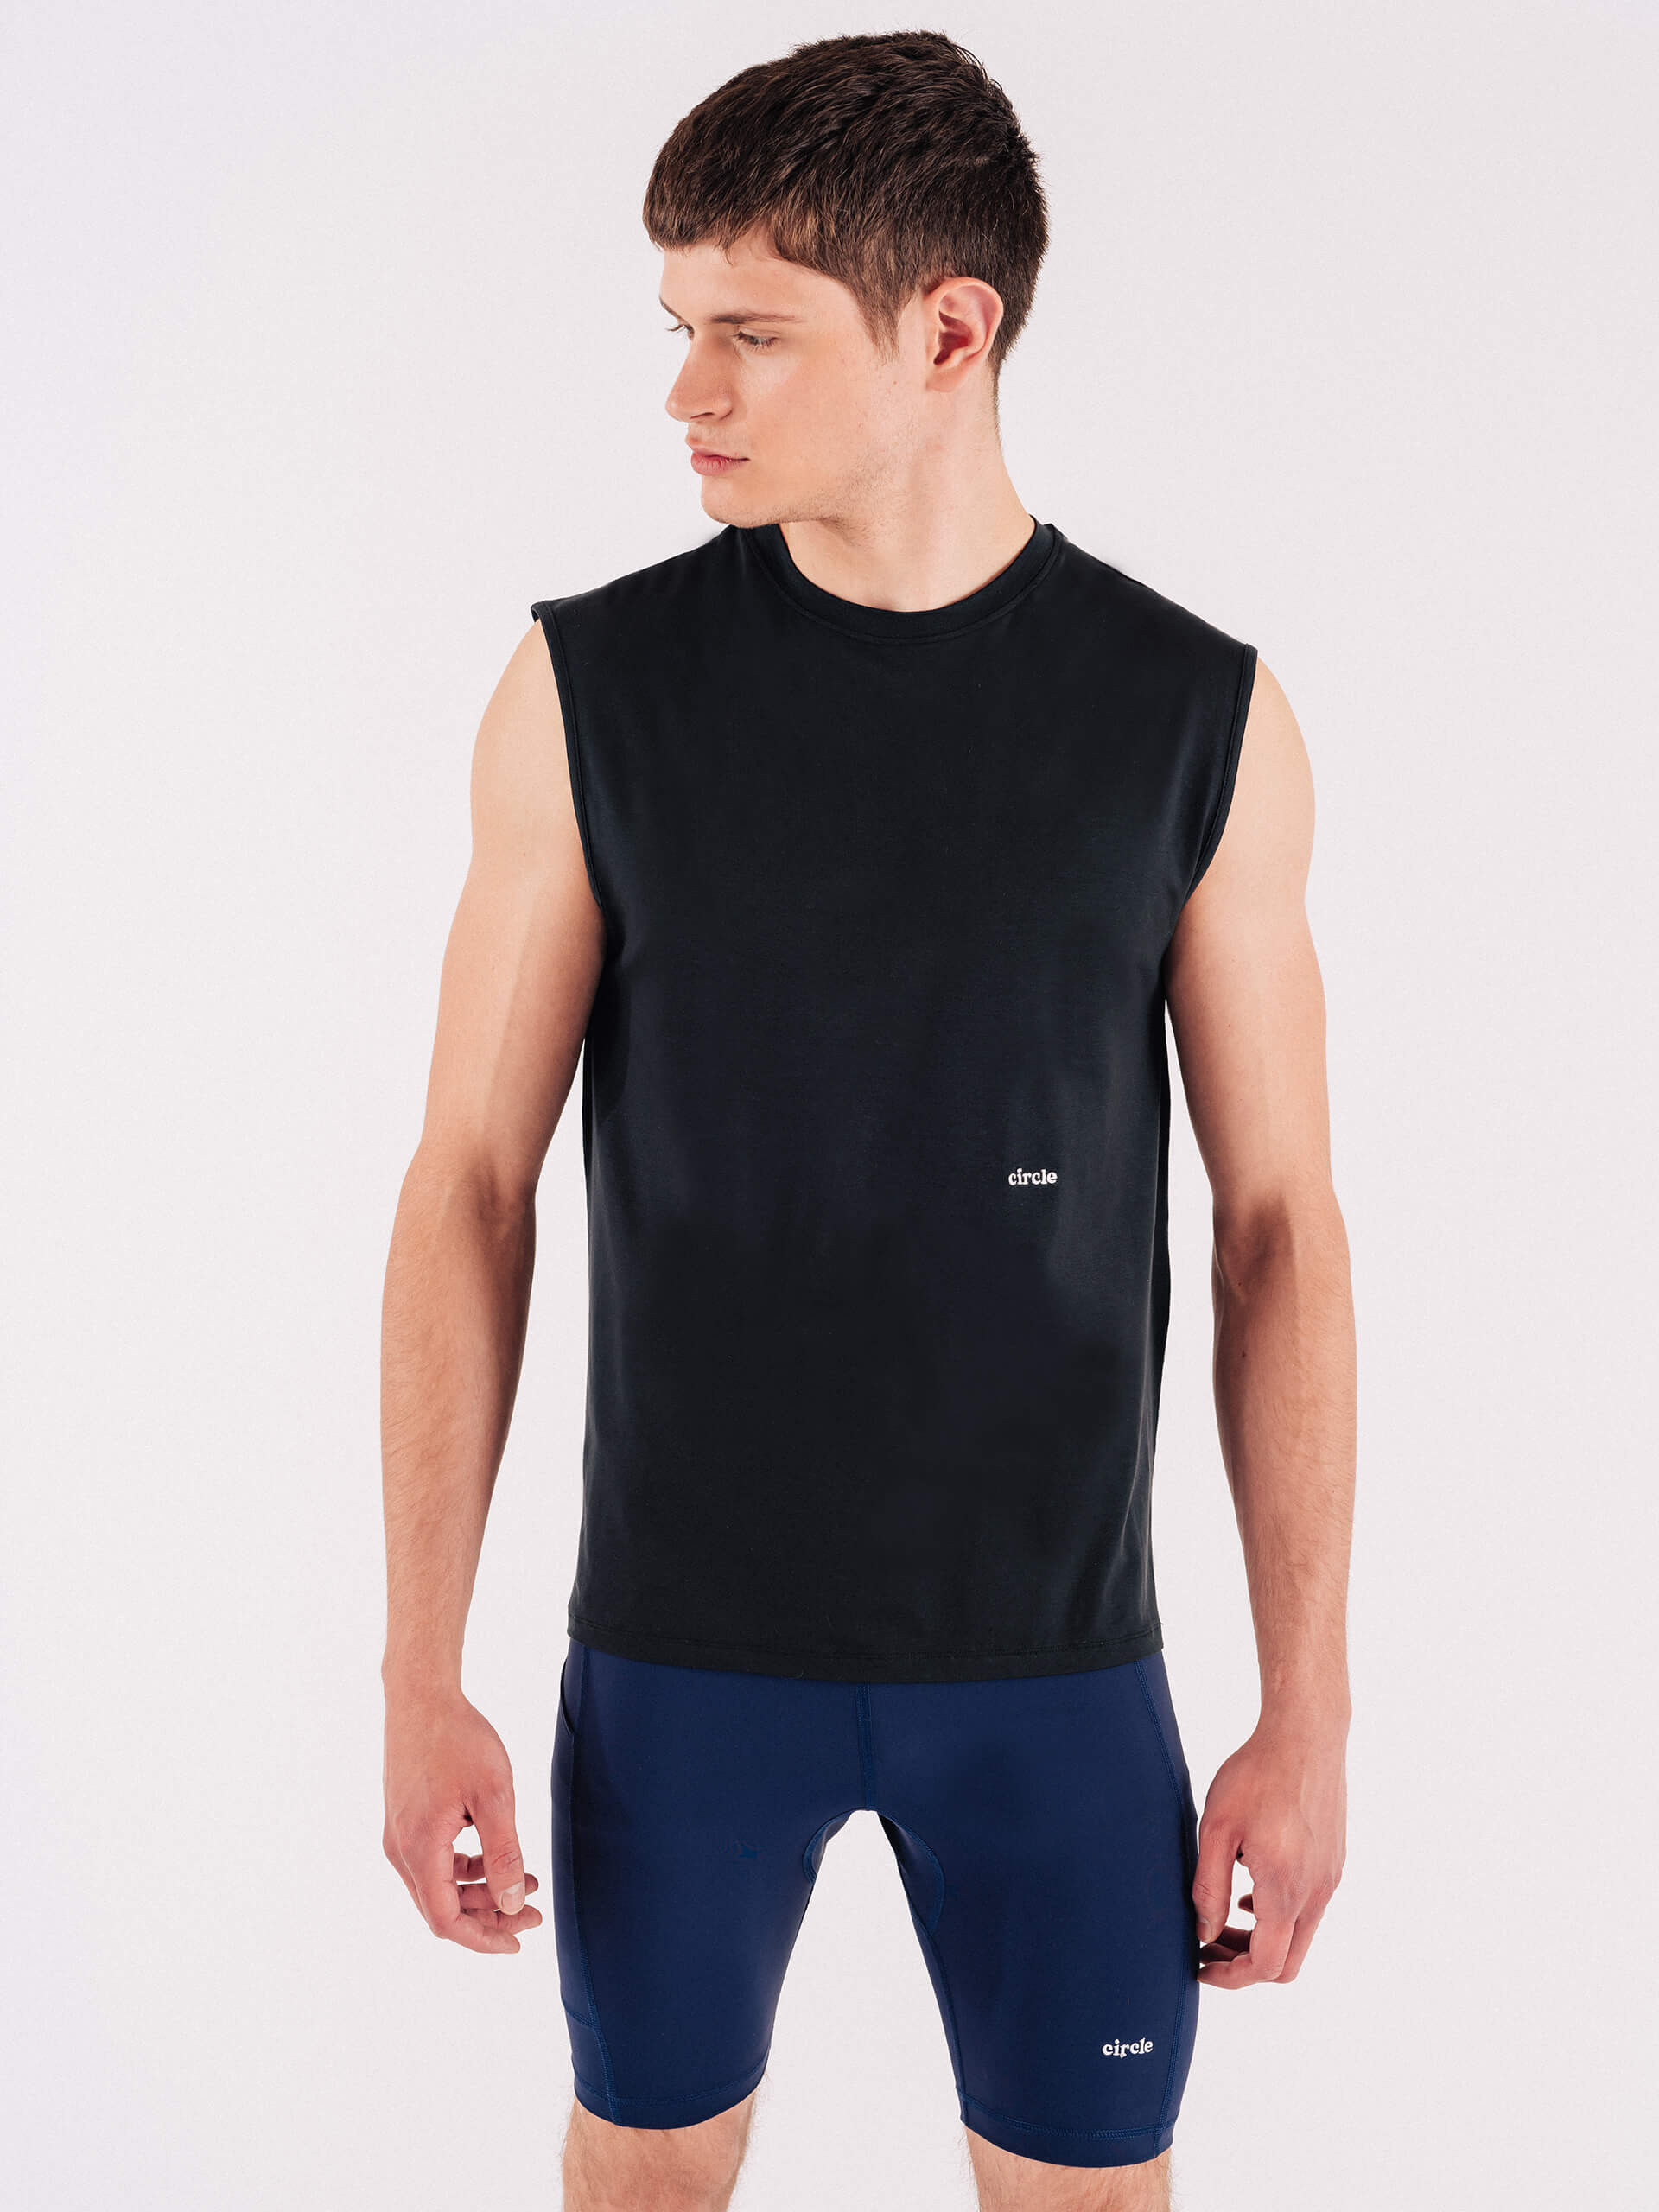 Circle Sportswear Muscle Tee - Camiseta - Hombre